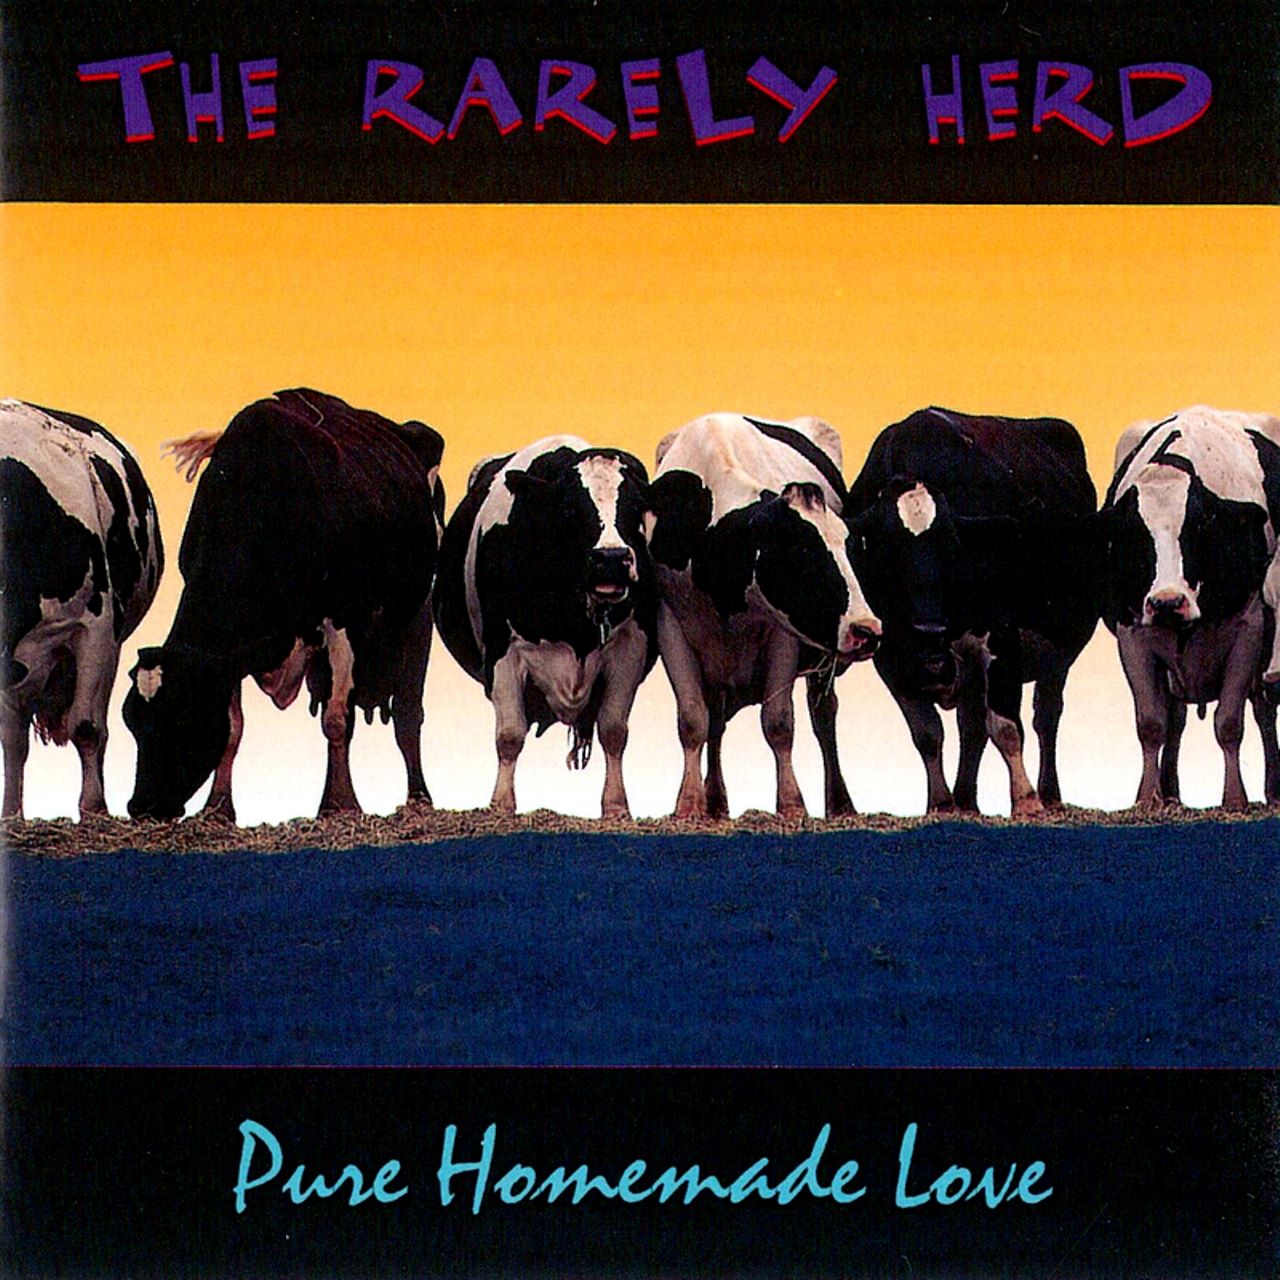 Rarely Herd - Pure Homemade Love cover album